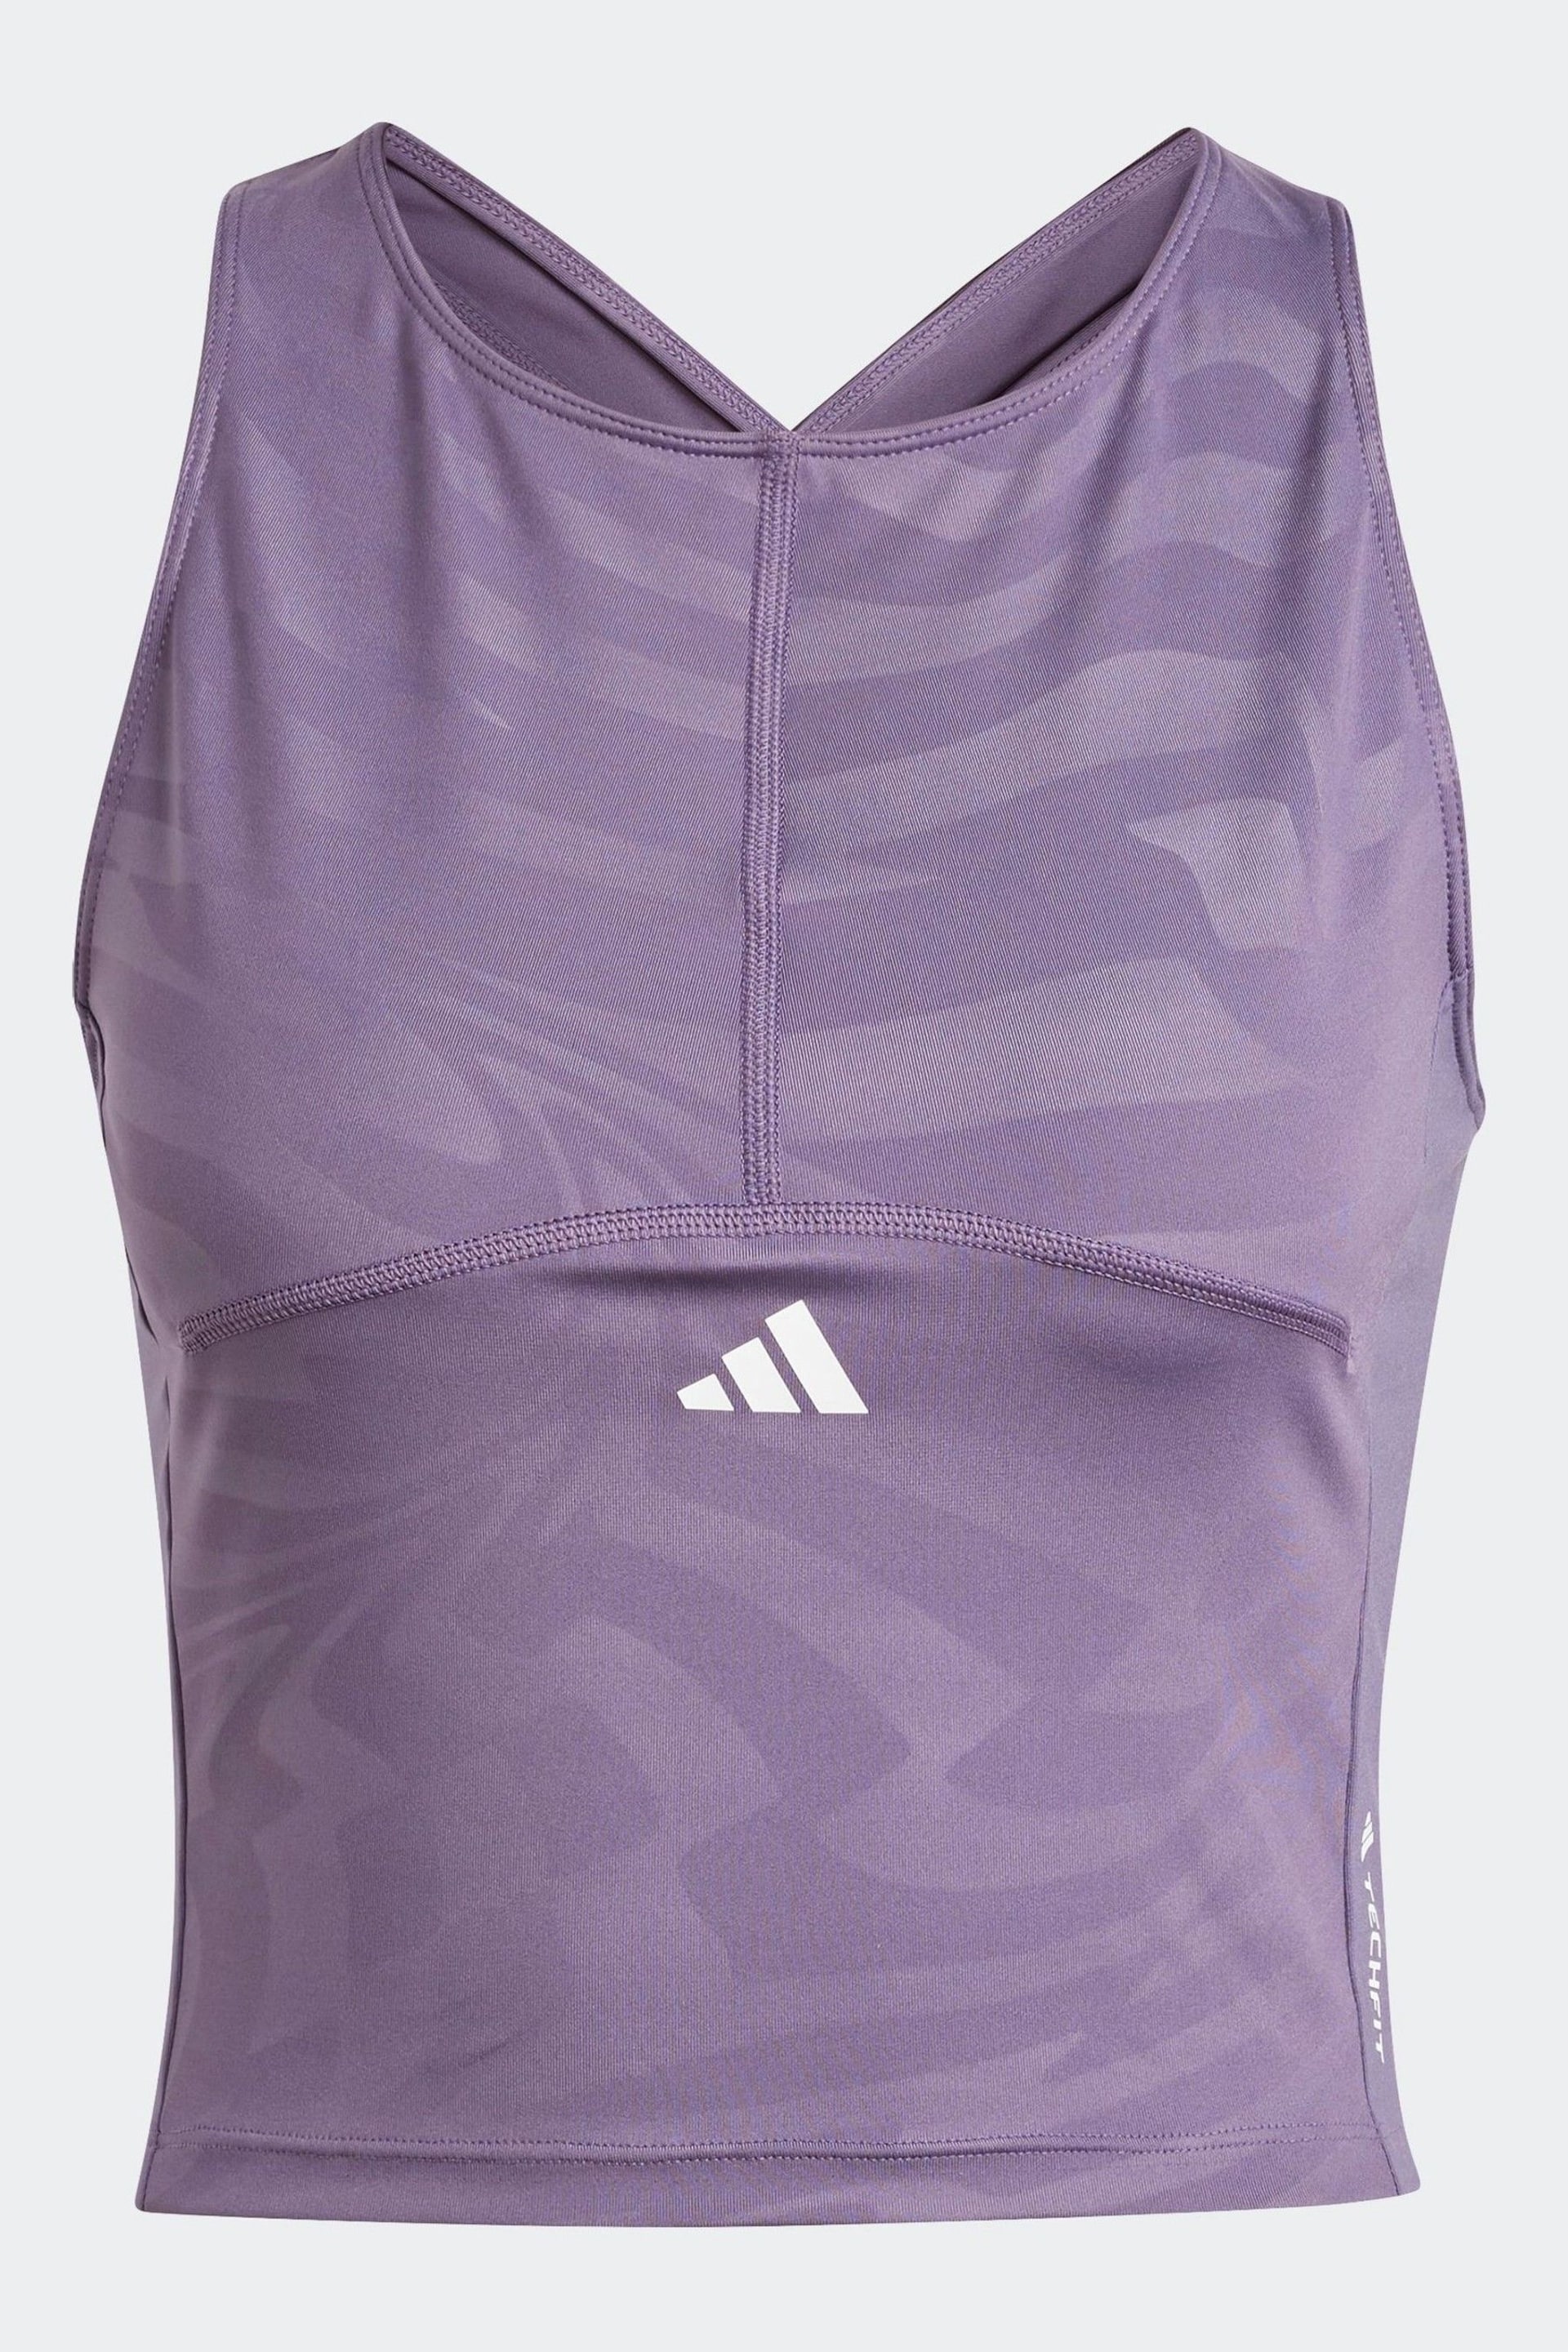 adidas Purple Techfit Printed Crop Vest - Image 7 of 7